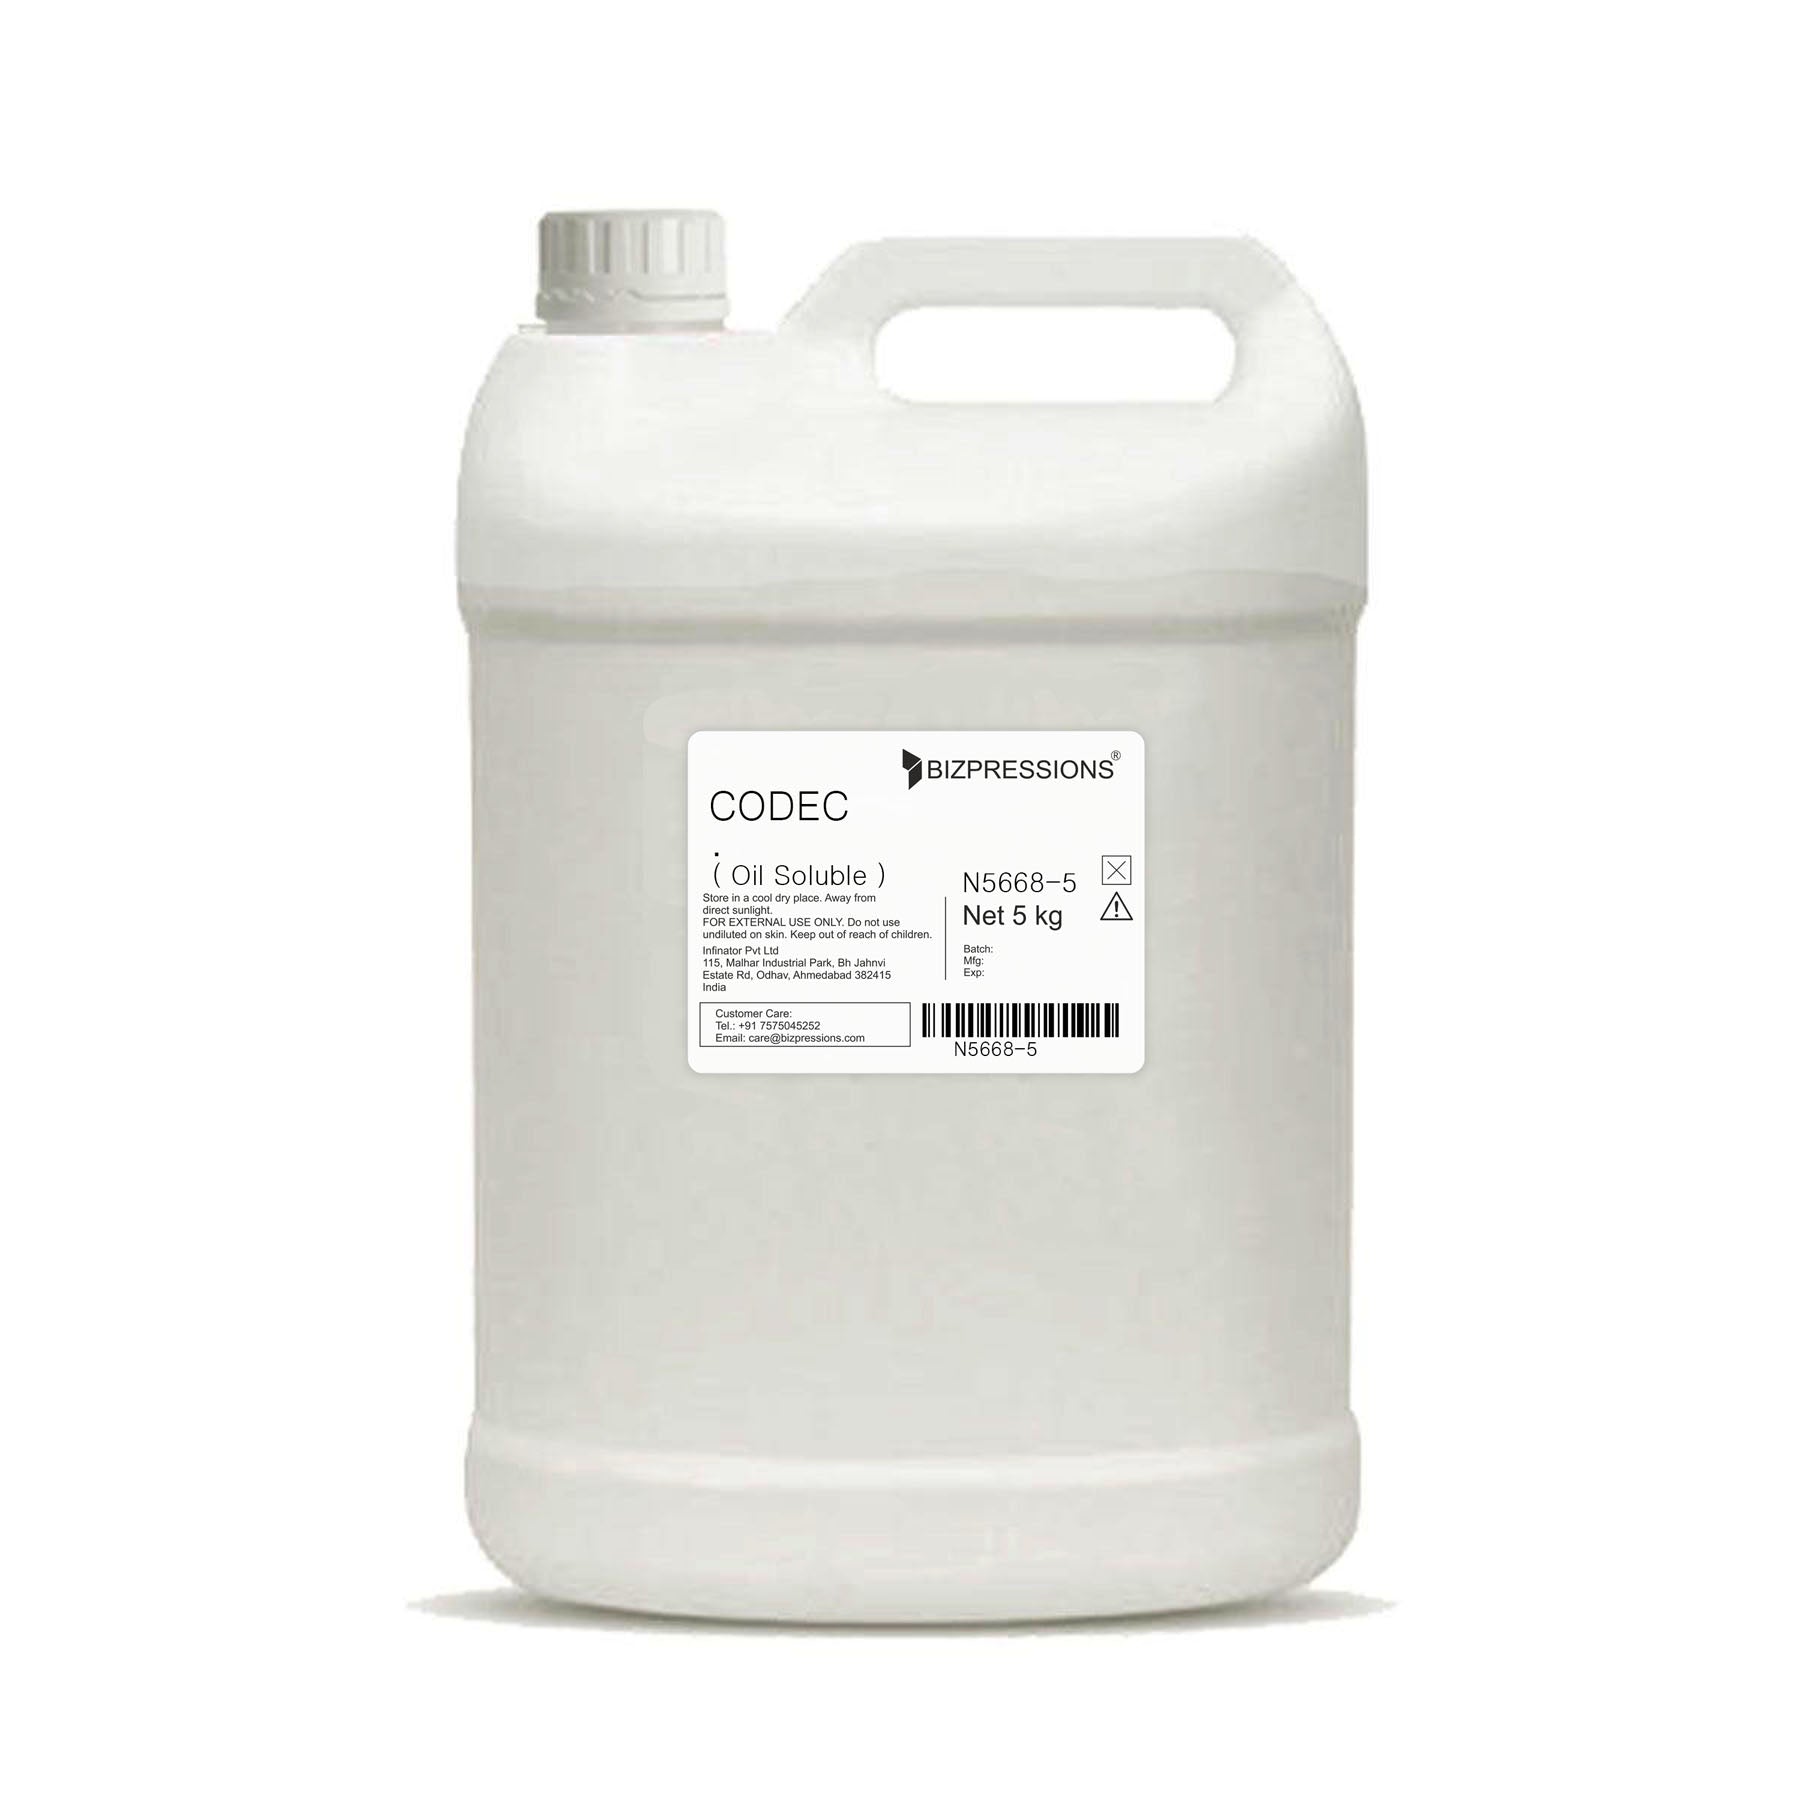 CODEC - Fragrance ( Oil Soluble ) - 5 kg